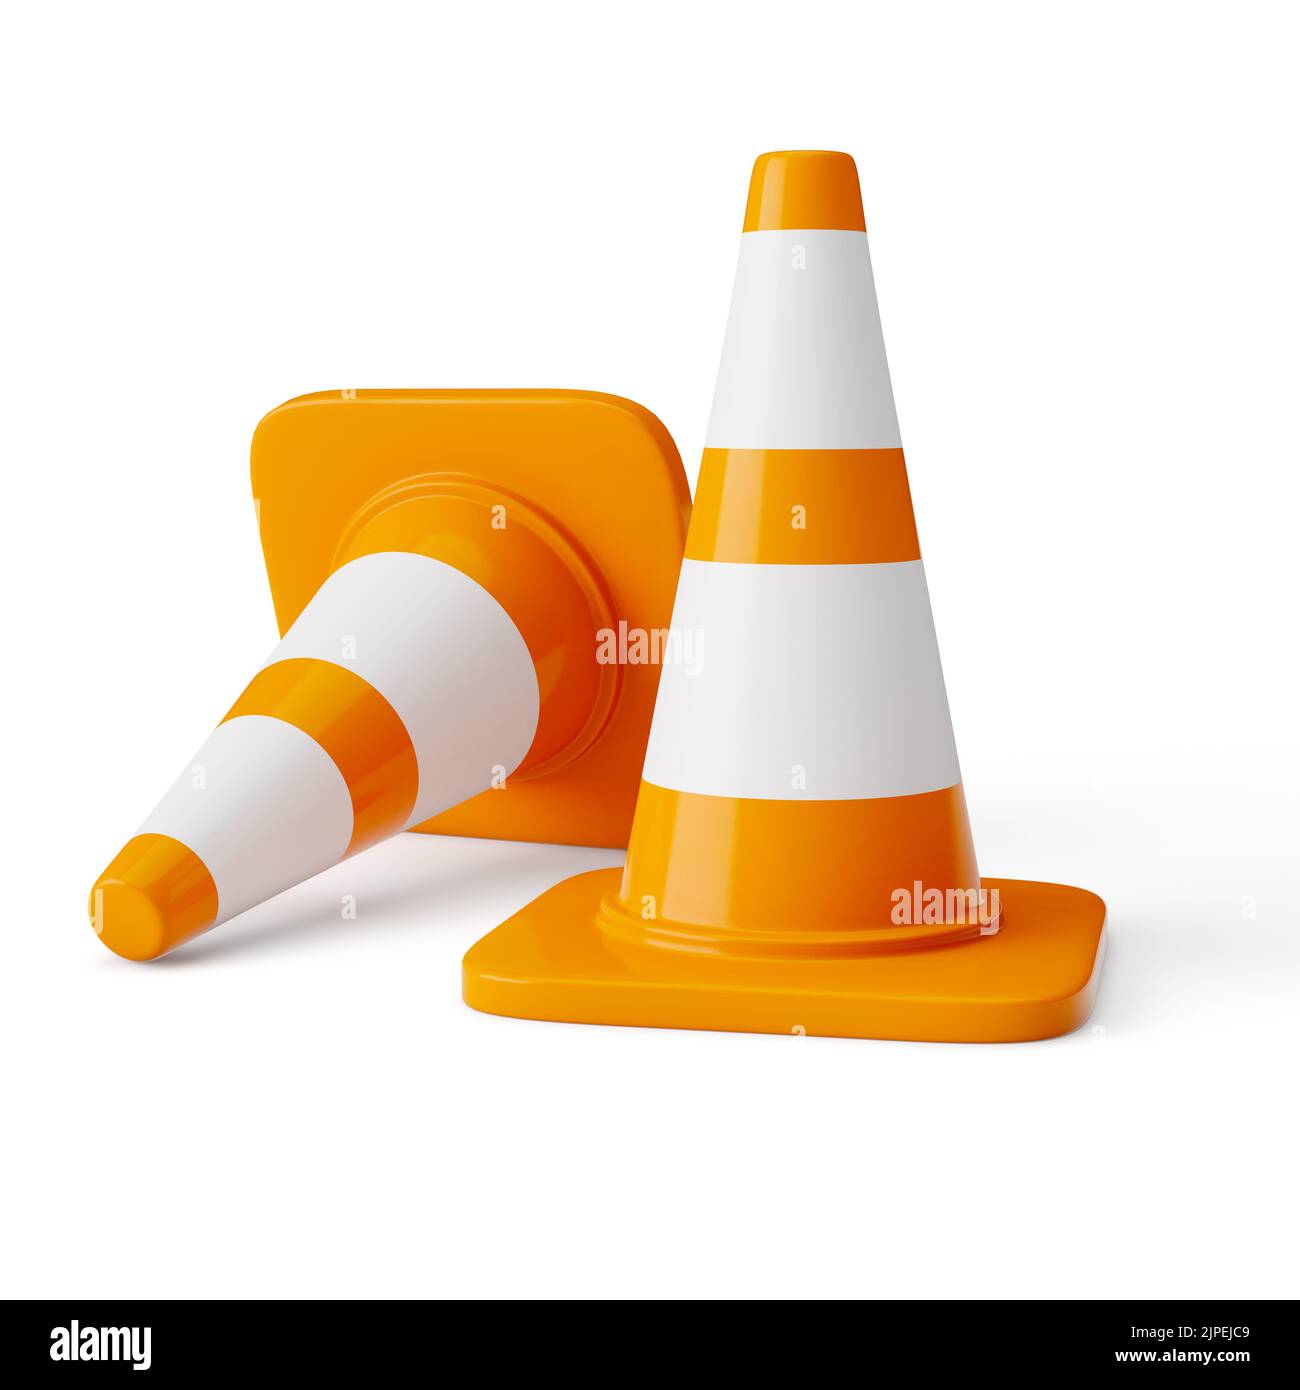 pylon, traffic cone, pylons, cone, traffic cones Stock Photo